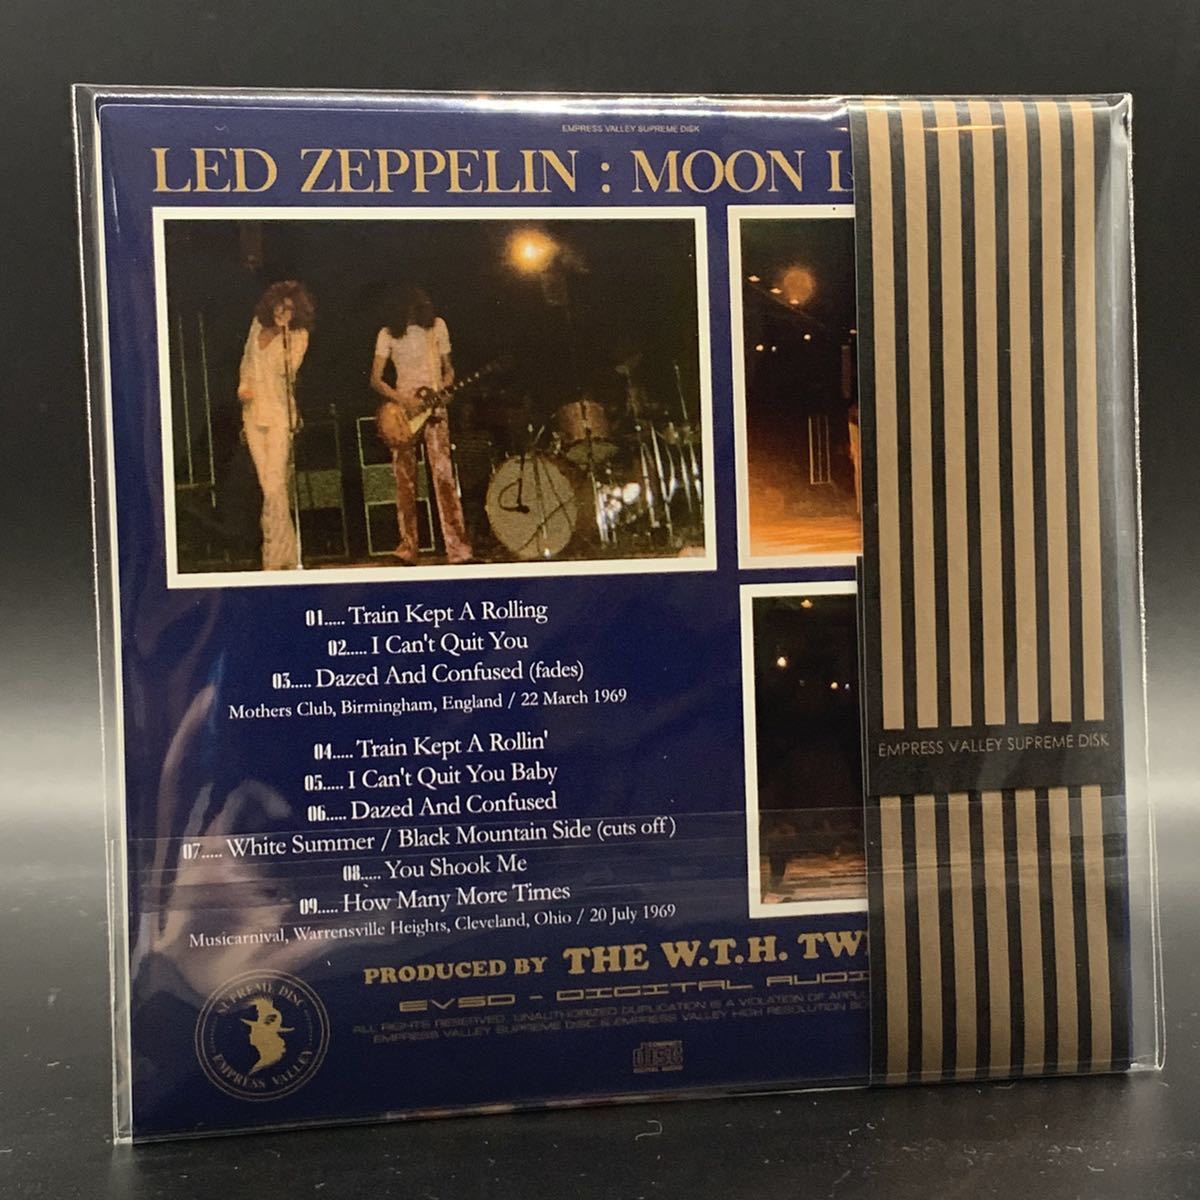 LED ZEPPELIN : MOON LANDING「月面着陸」CD 1969 LIVE “NEW ONE” EMPRESS VALLEY SUPREME DISK